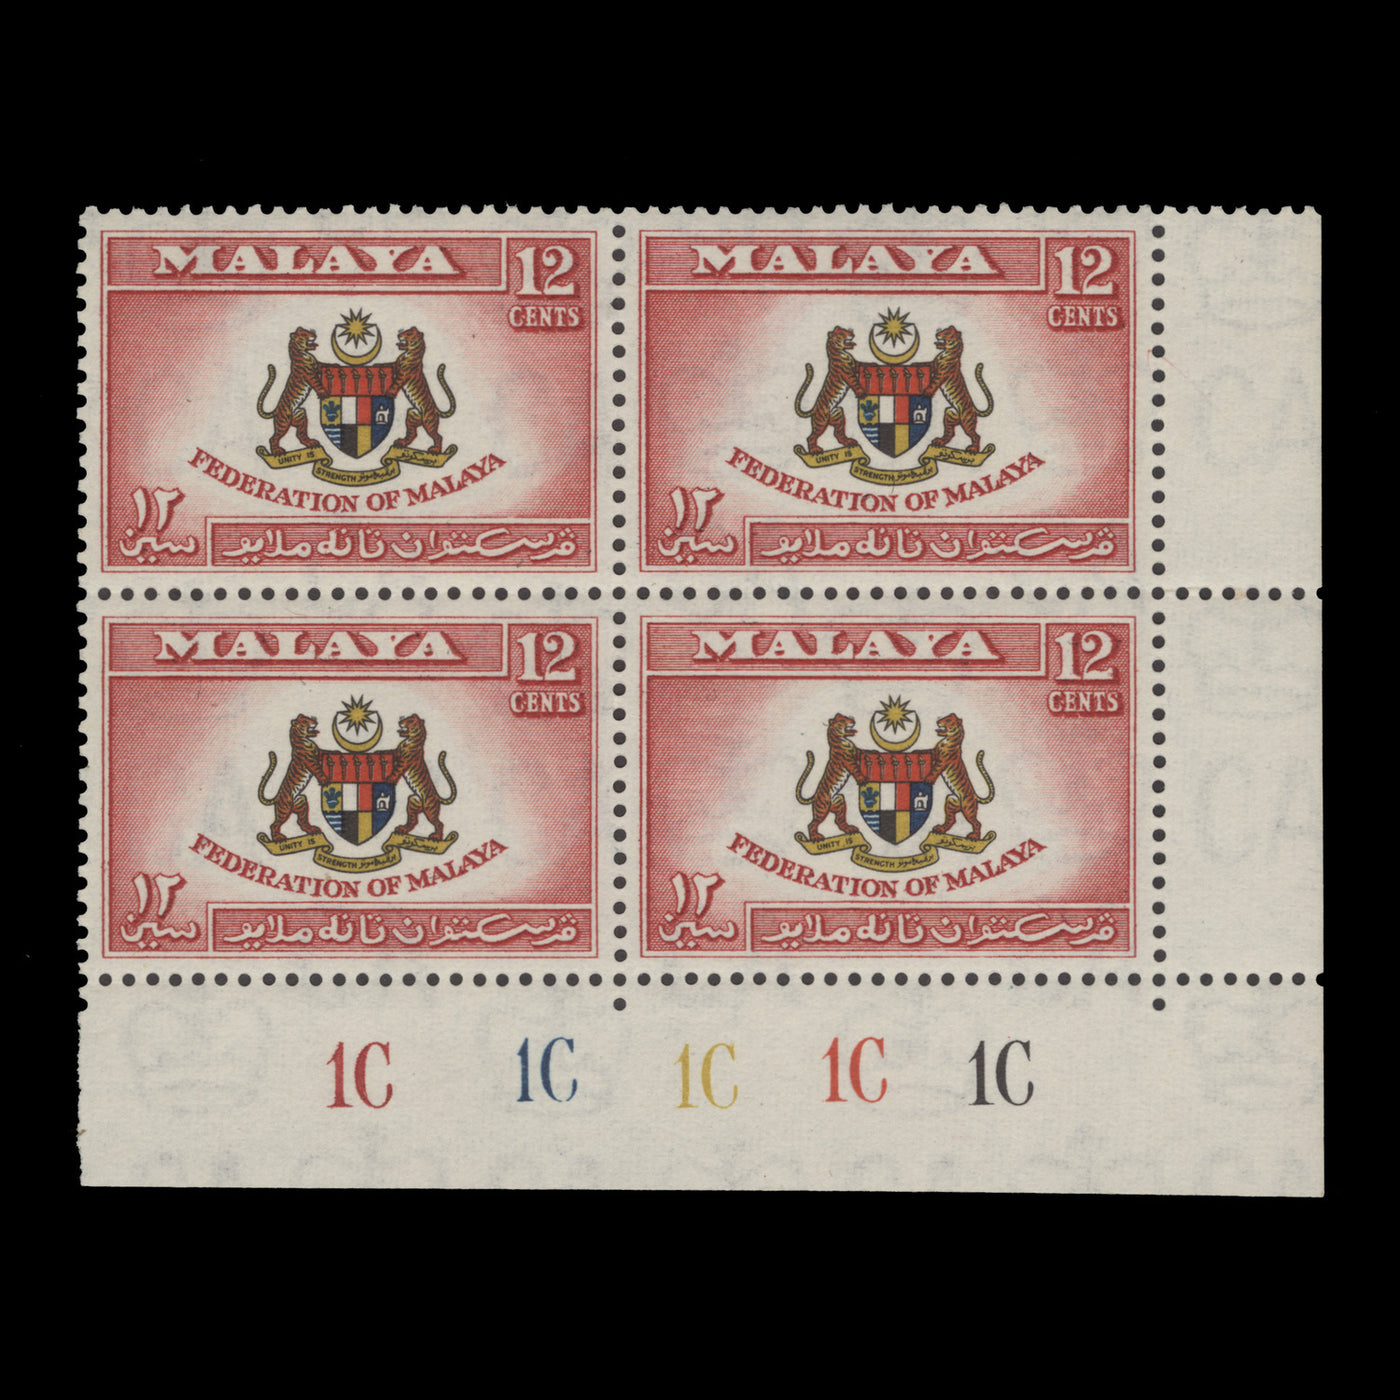 Malaya 1957 12c Federation Arms plate 1C–1C–1C–1C block